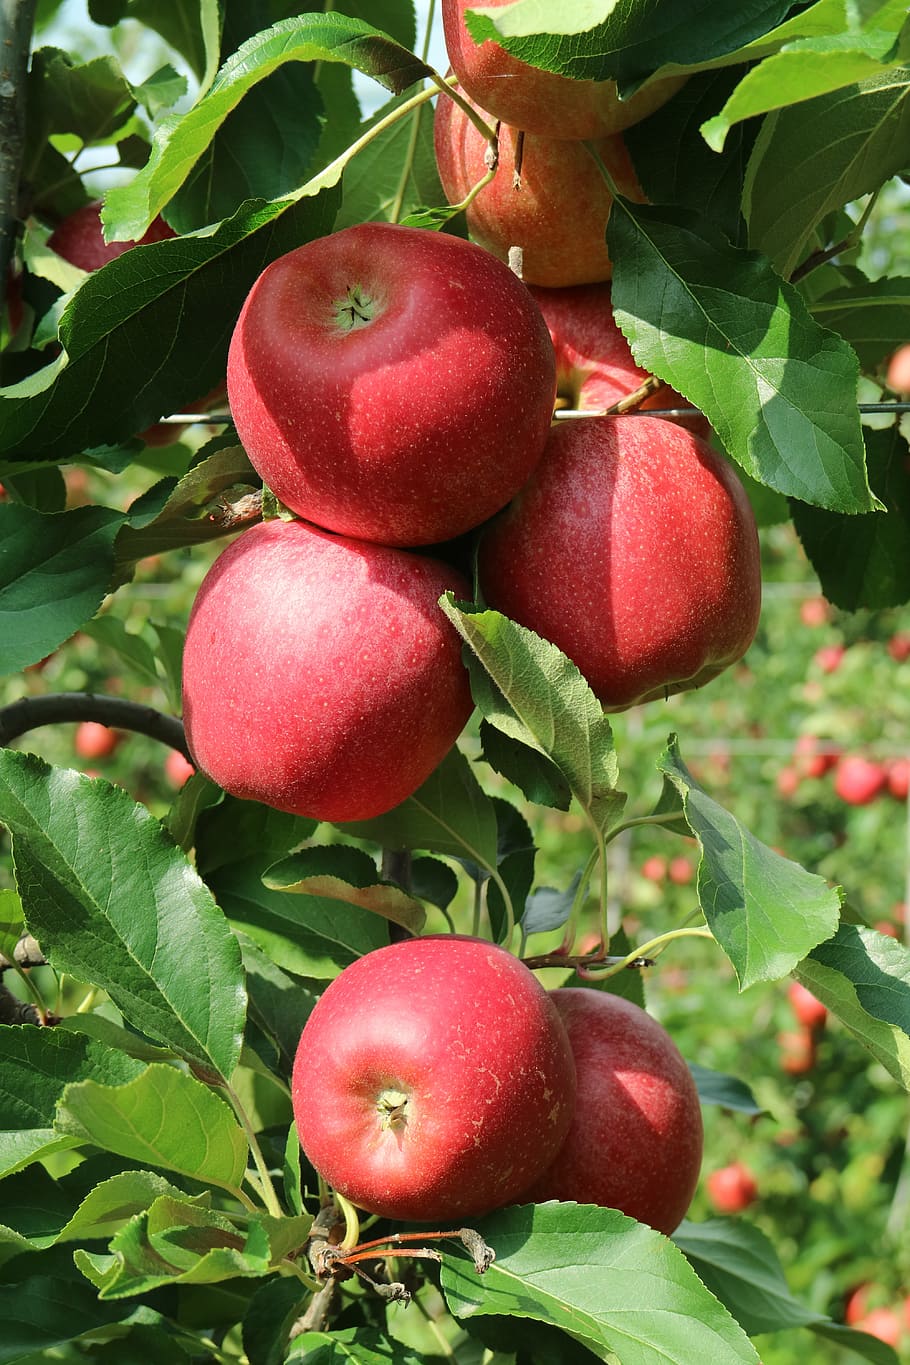 Manzanas, Valtellina, Lombardía, manzanas Valtellina, manzanas agradables, manzana roja, Italia, fruta, alimentos, naturaleza